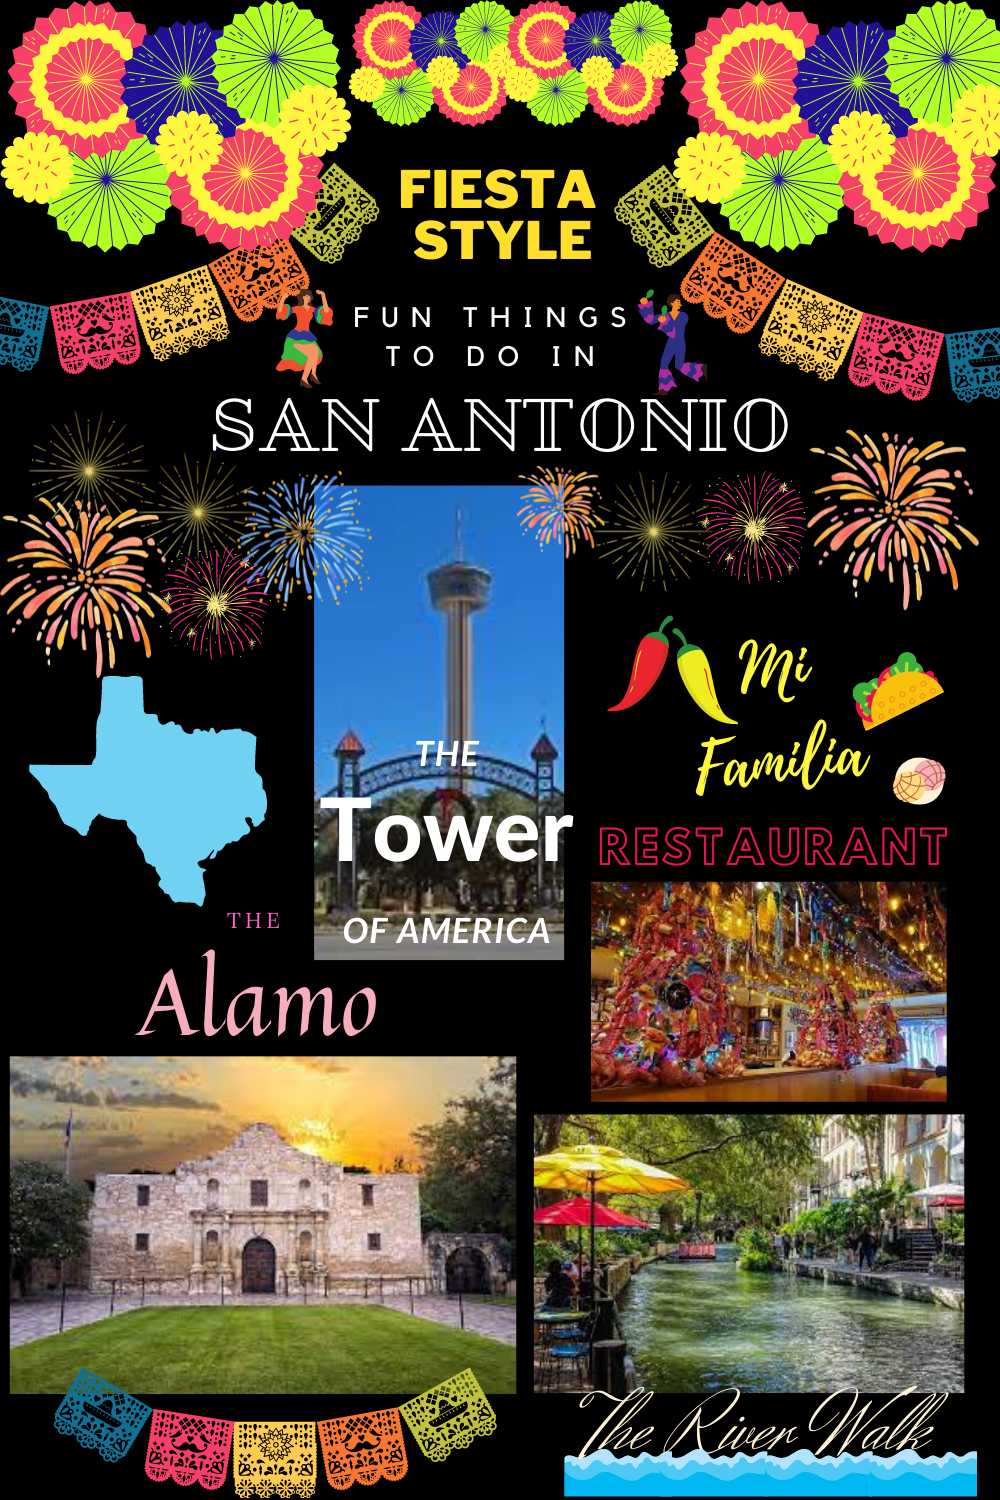 Fun Things To Do in San Antonio For Fiesta